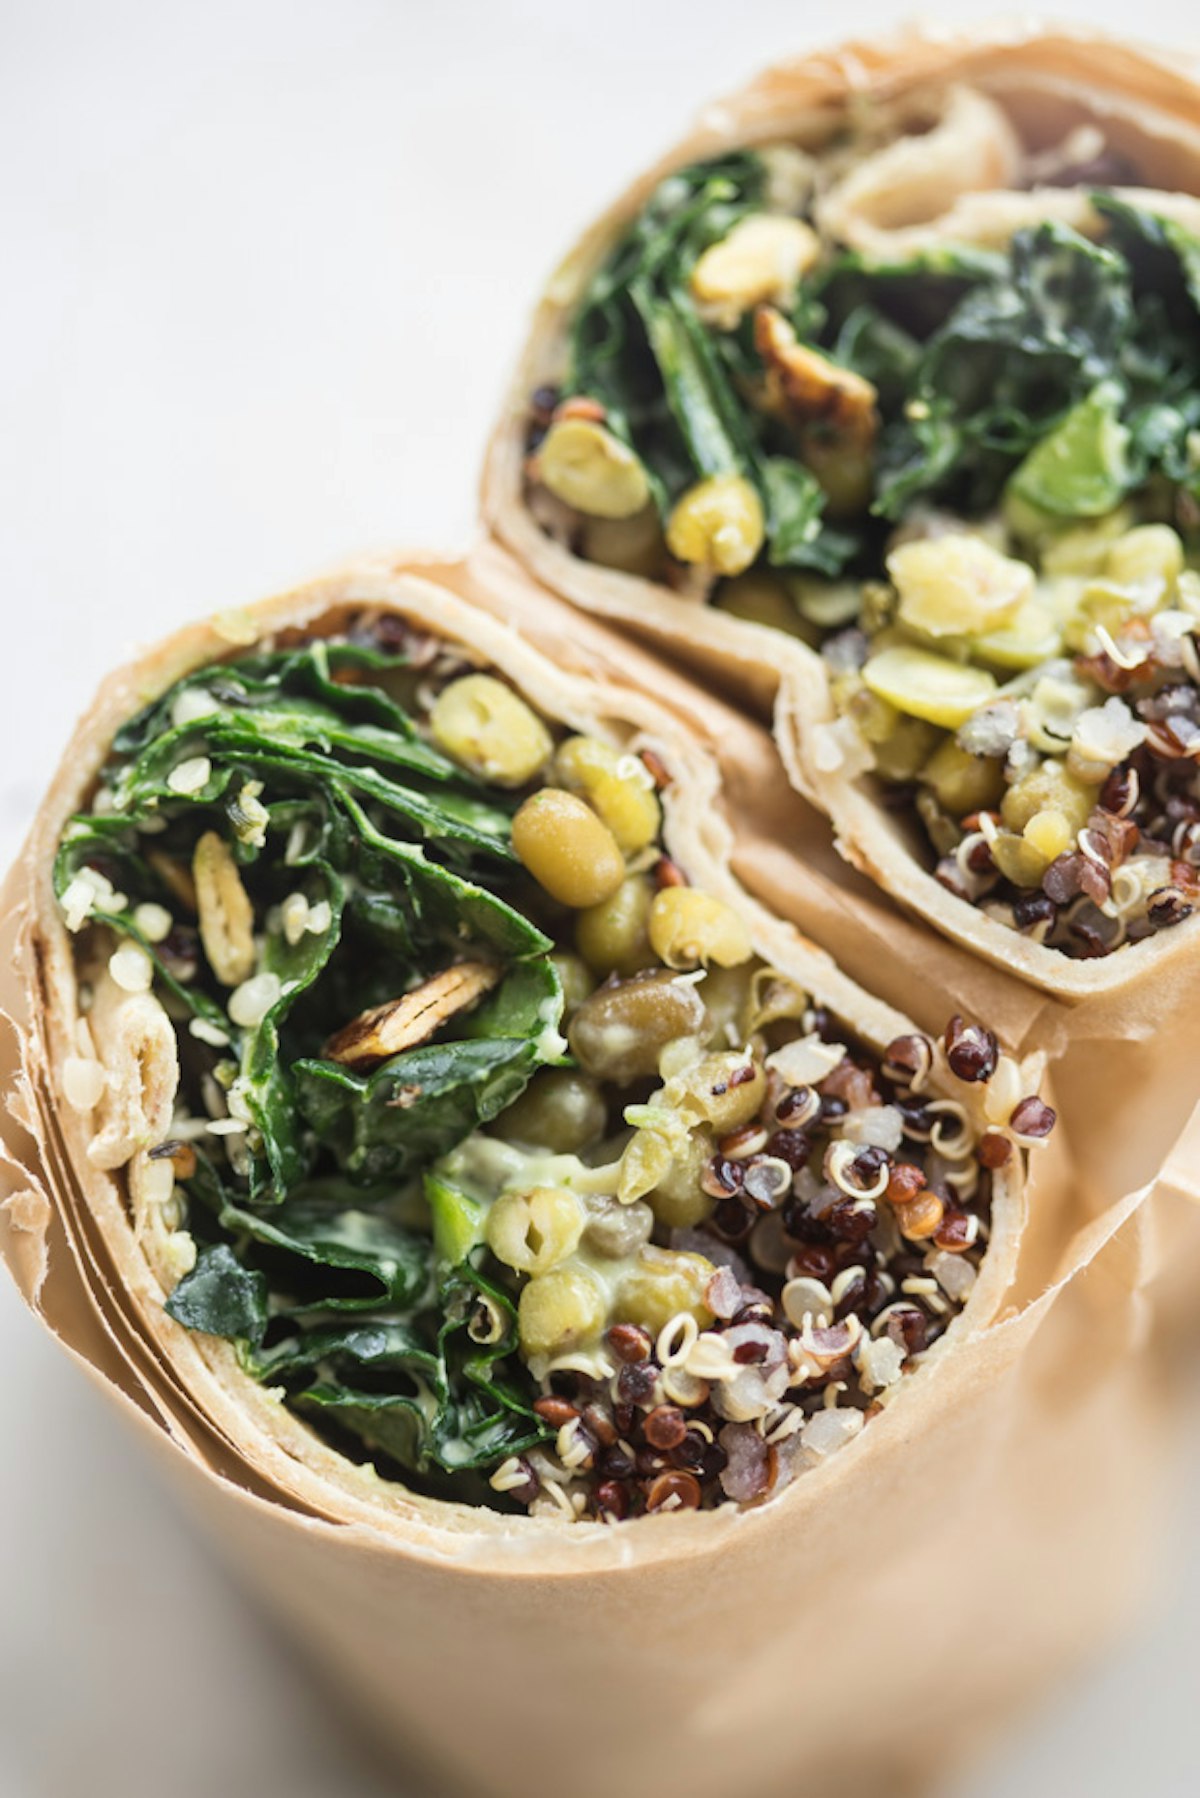 Protein Quinoa & Bean Burrito Wrap